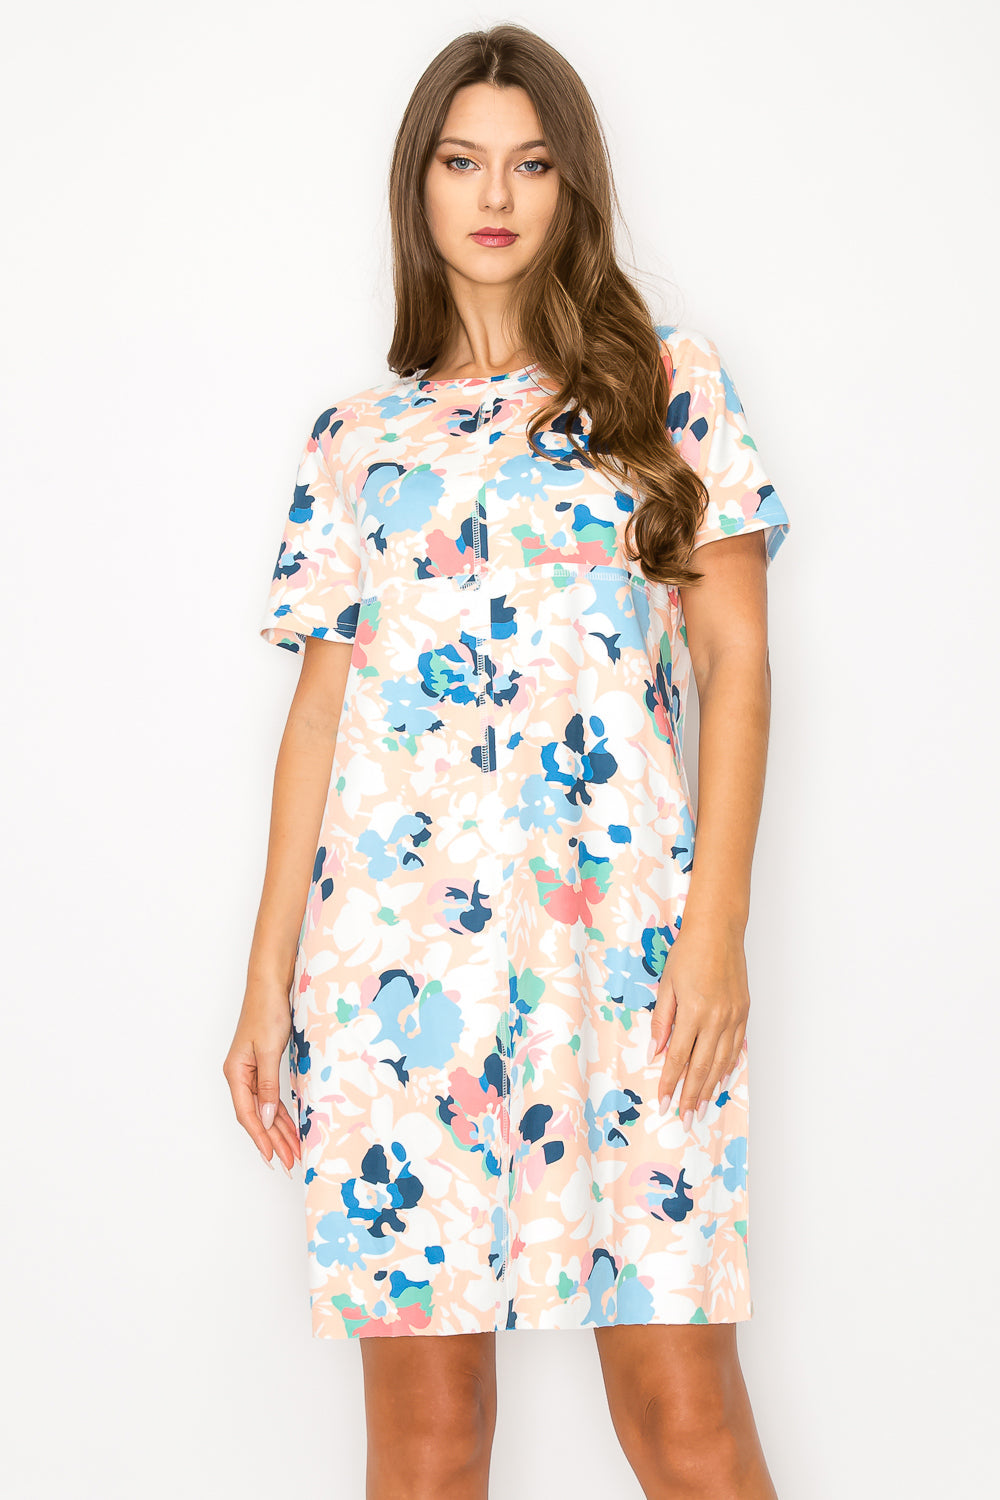 Audrey Stretch Suede Dress - Multi Flower Print